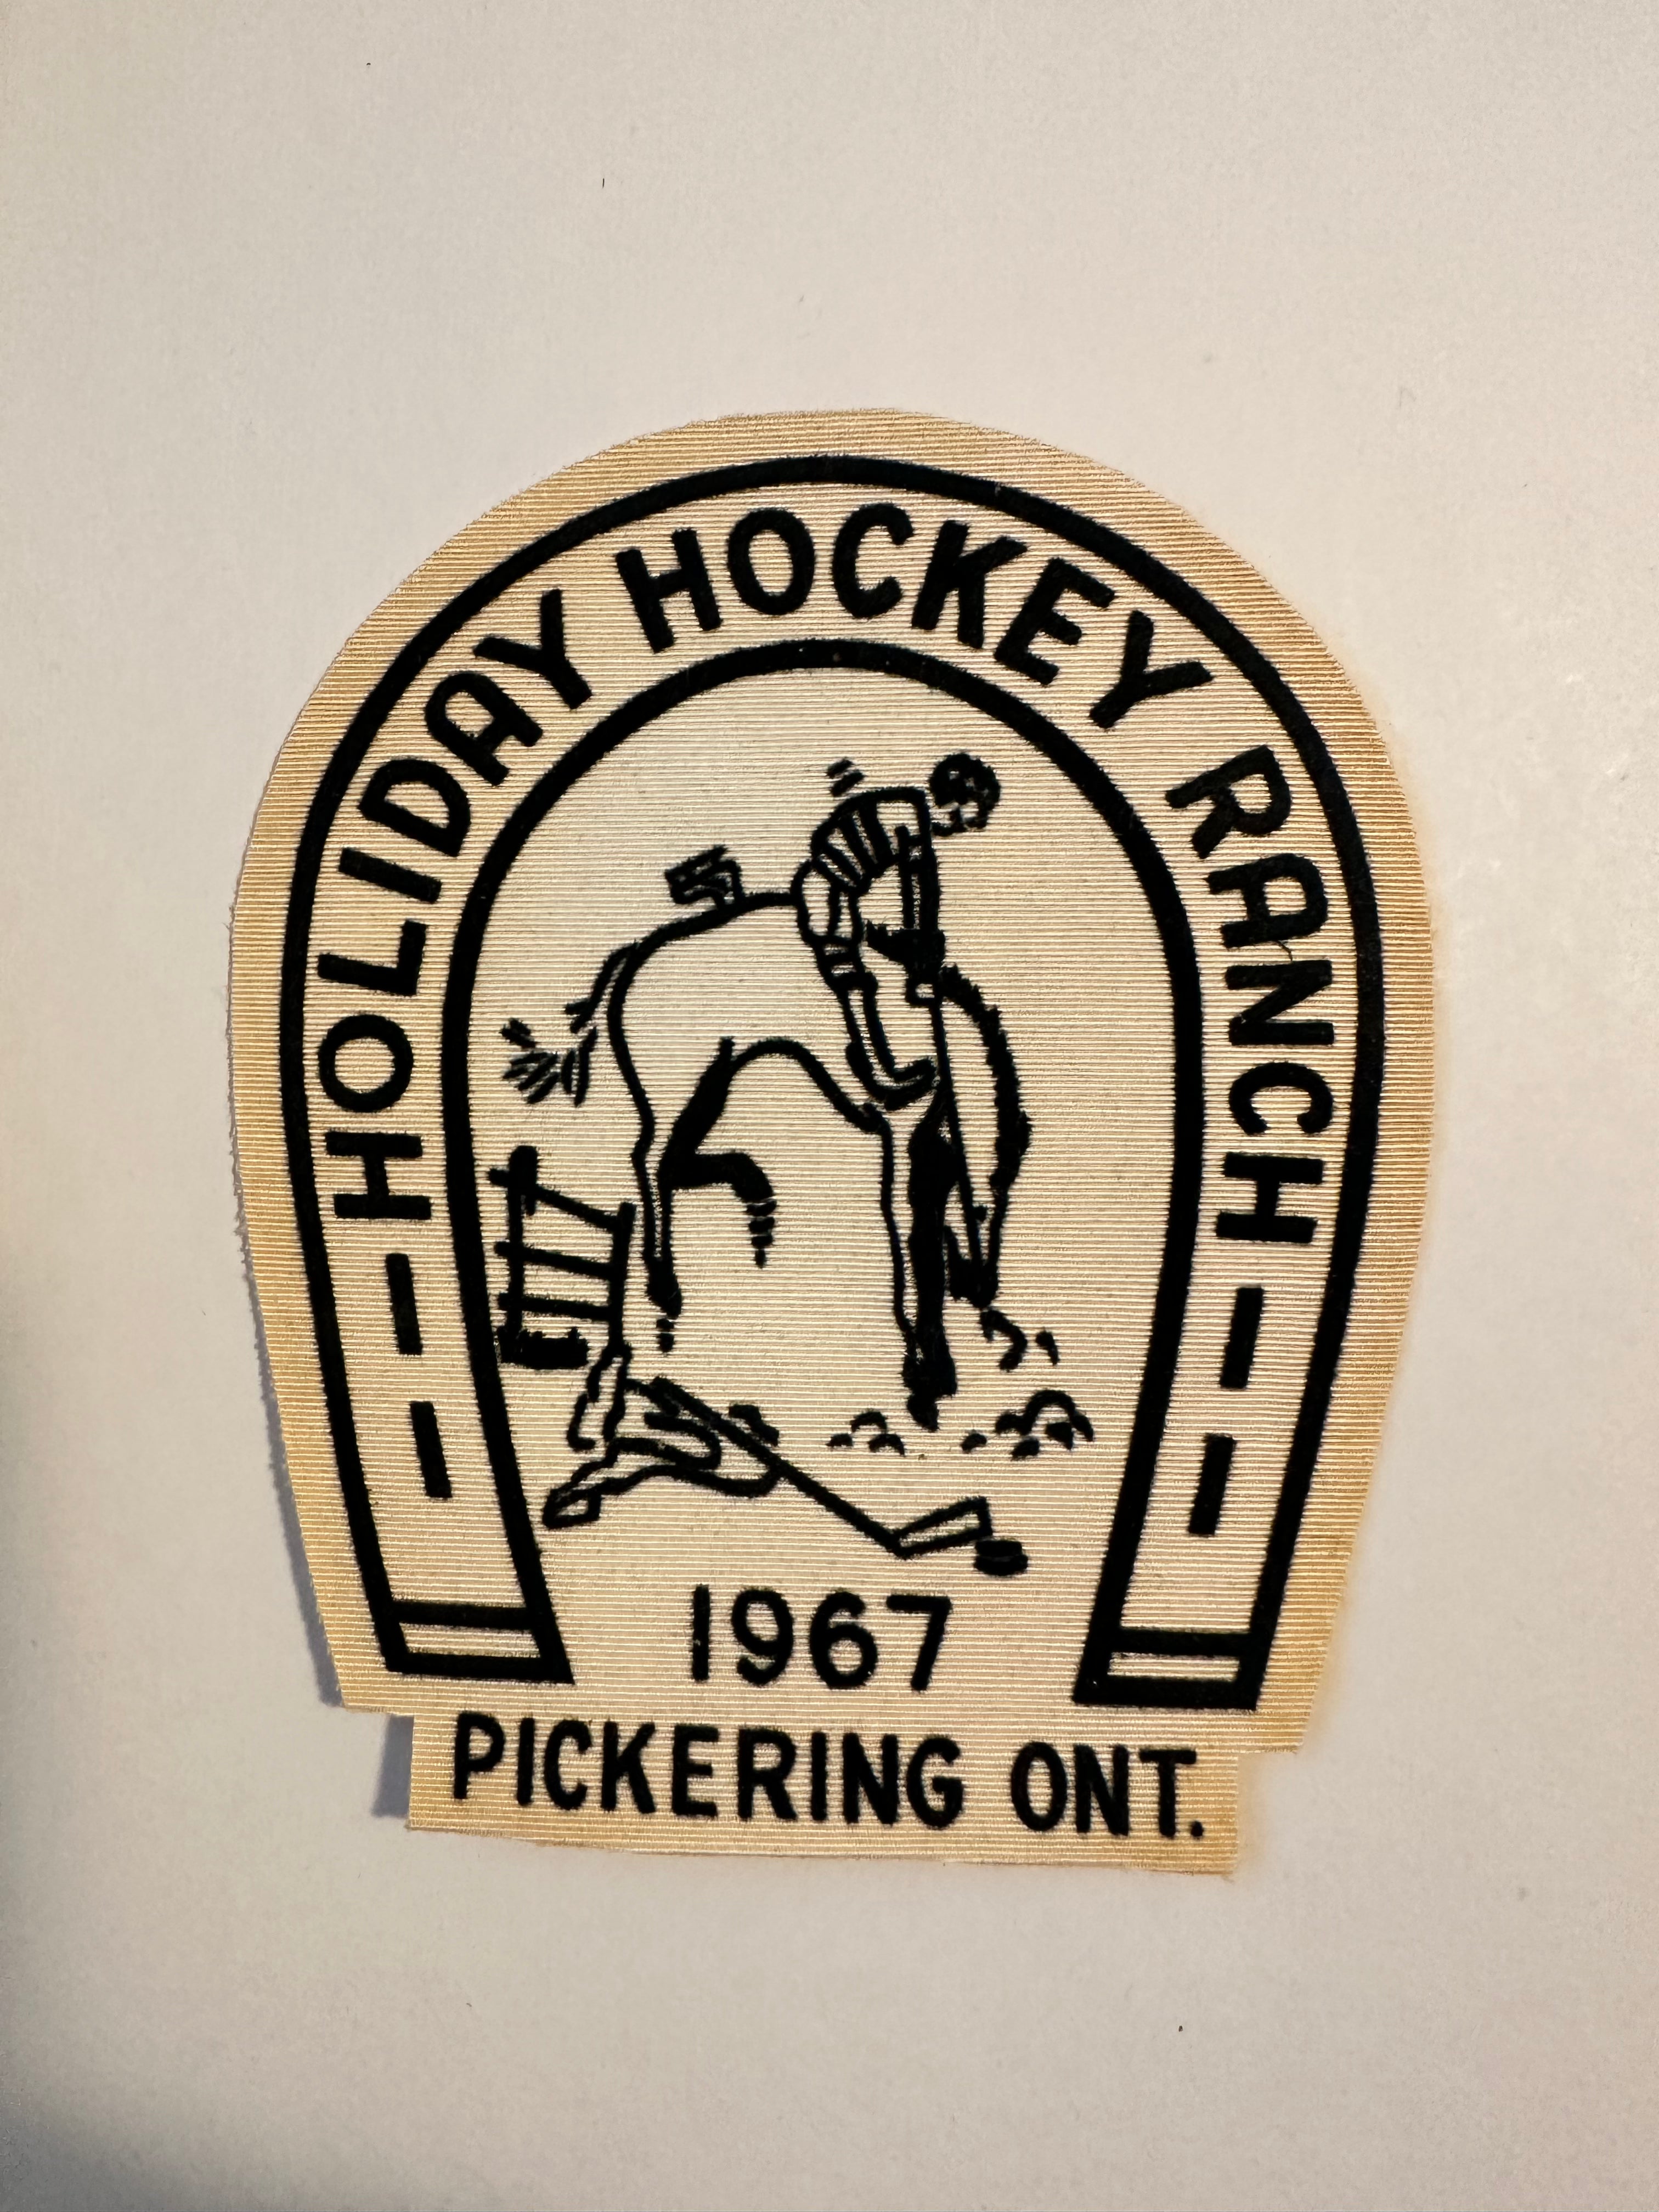 Hockey Holiday ranch rare patch 1967